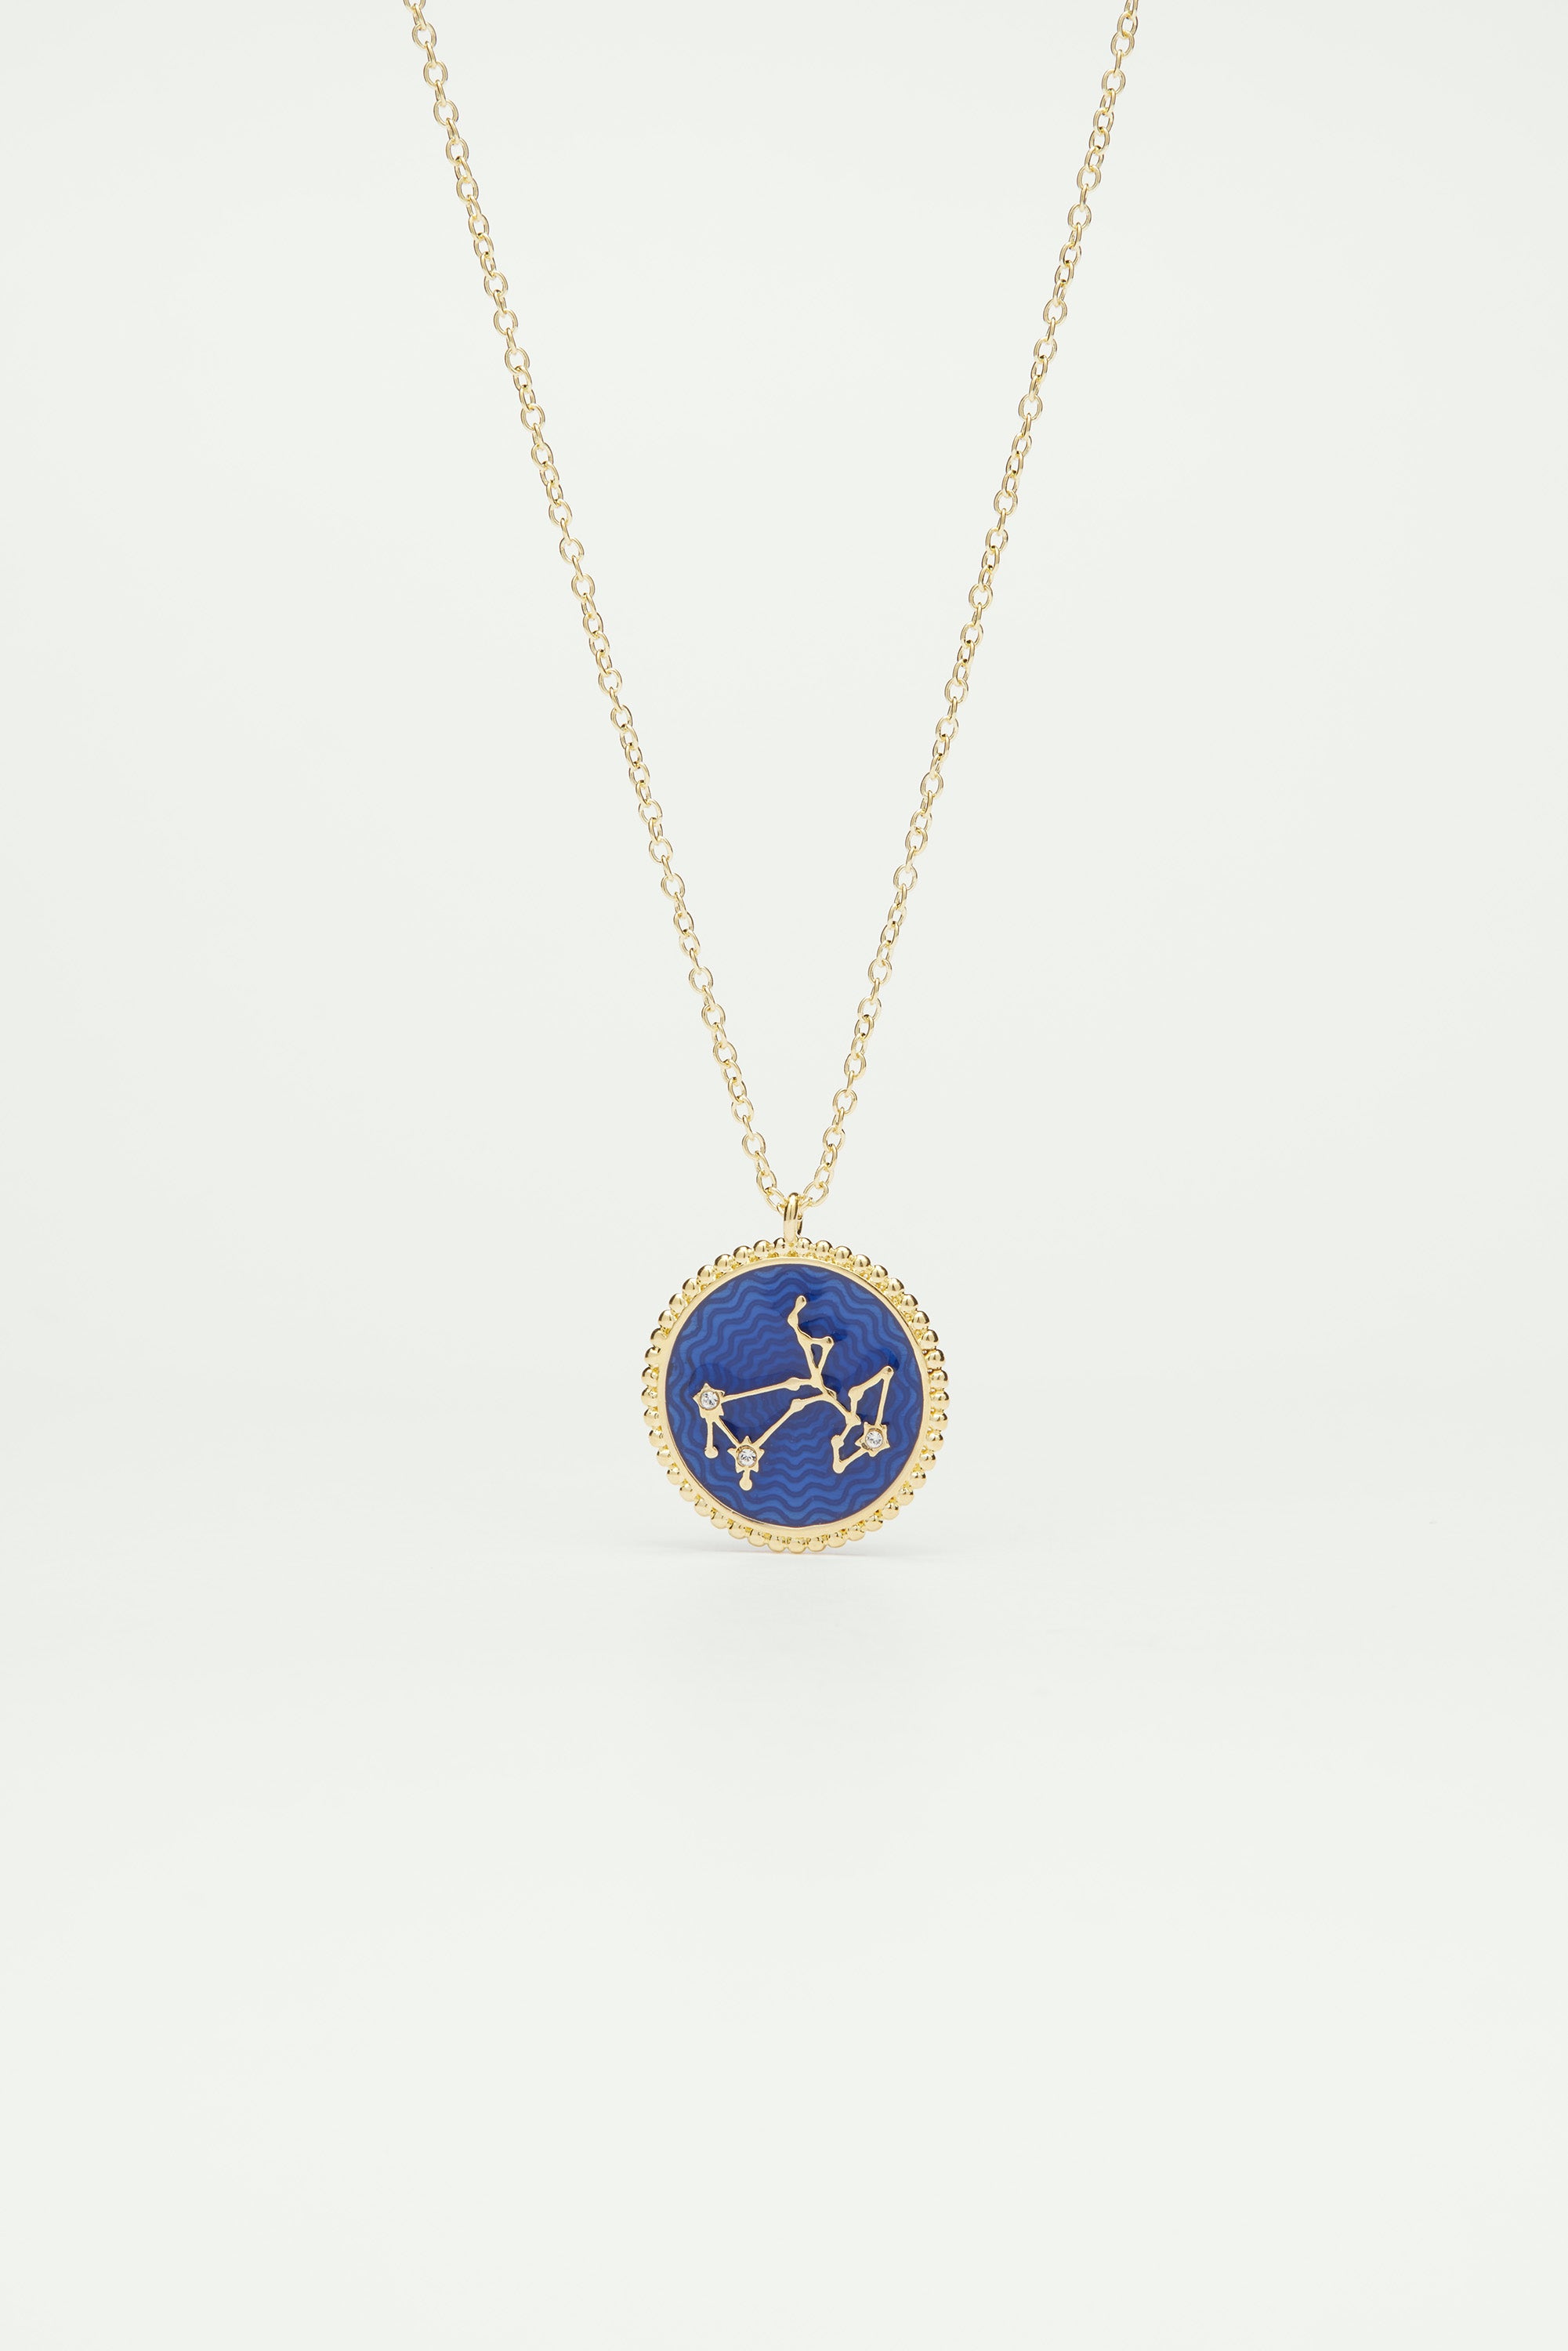 Collier pendentif signe astrologique sagittaire